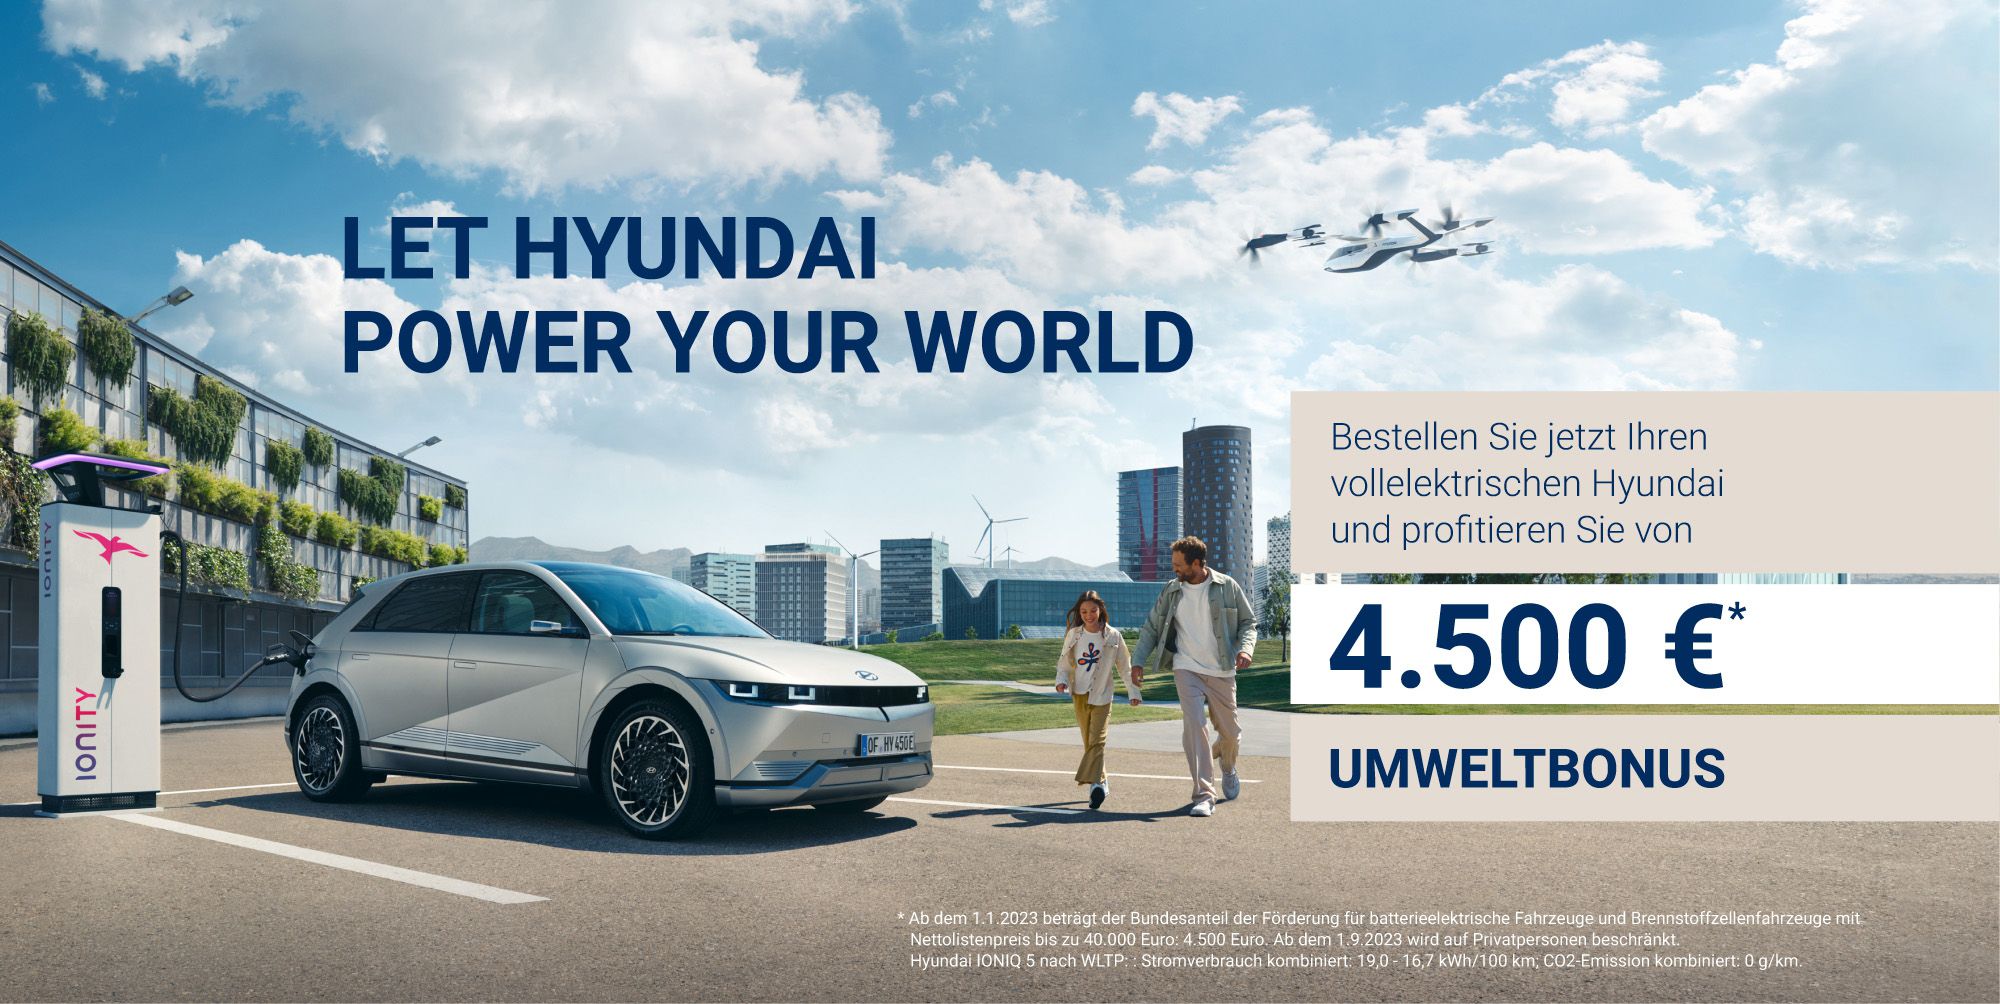 Let Hyundai power your world